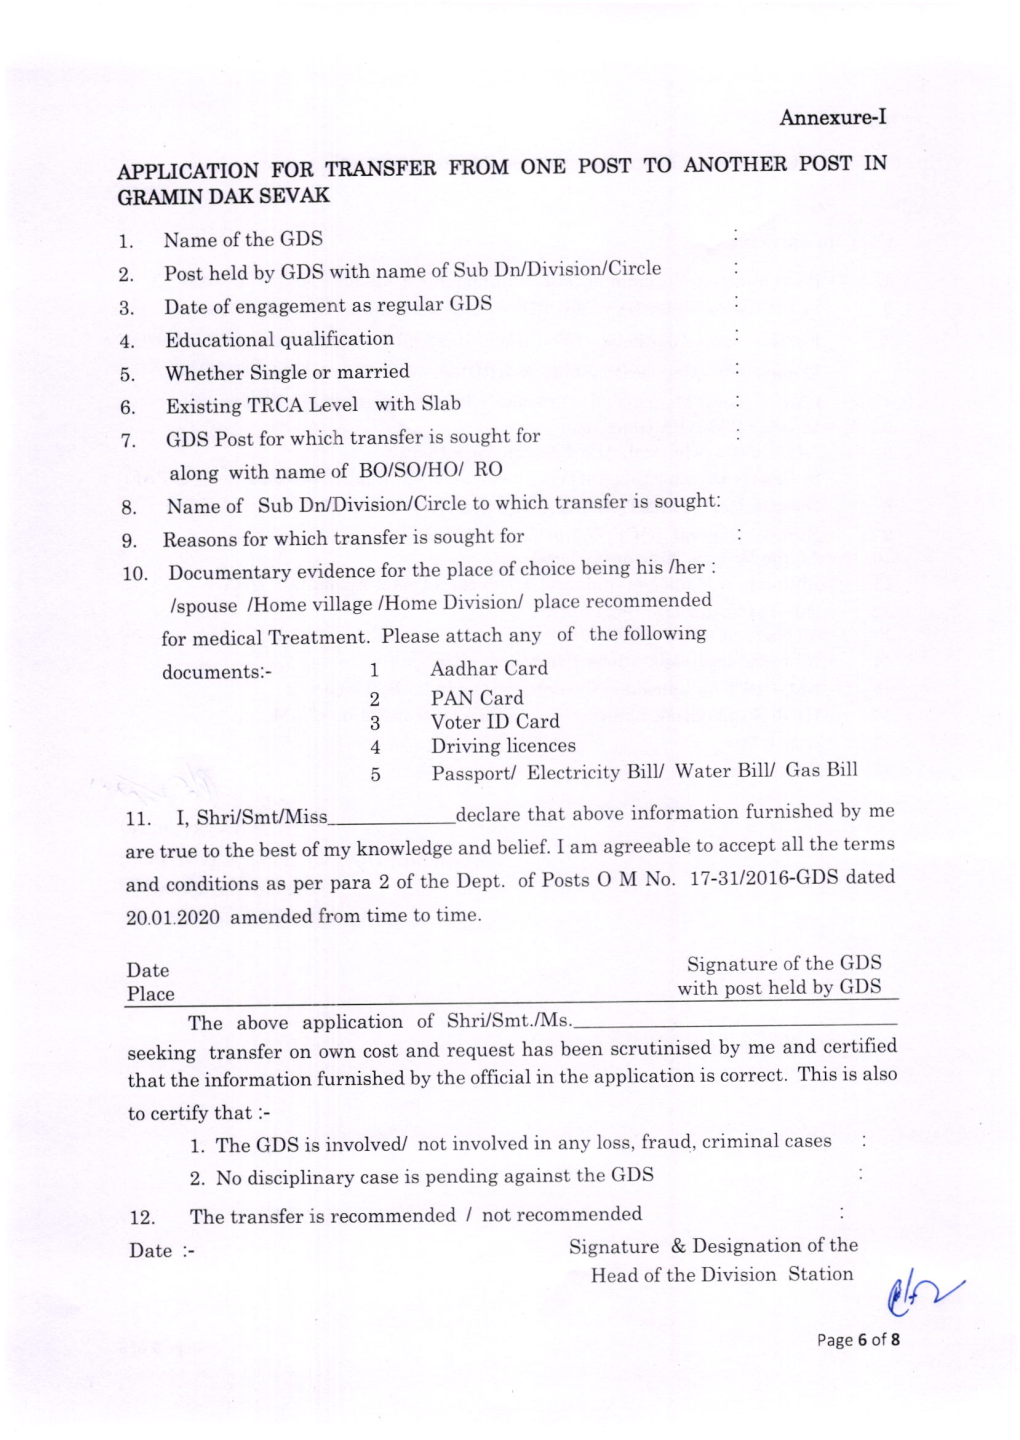 4. Educational Qualification Documents:- 1 Aadhar Card